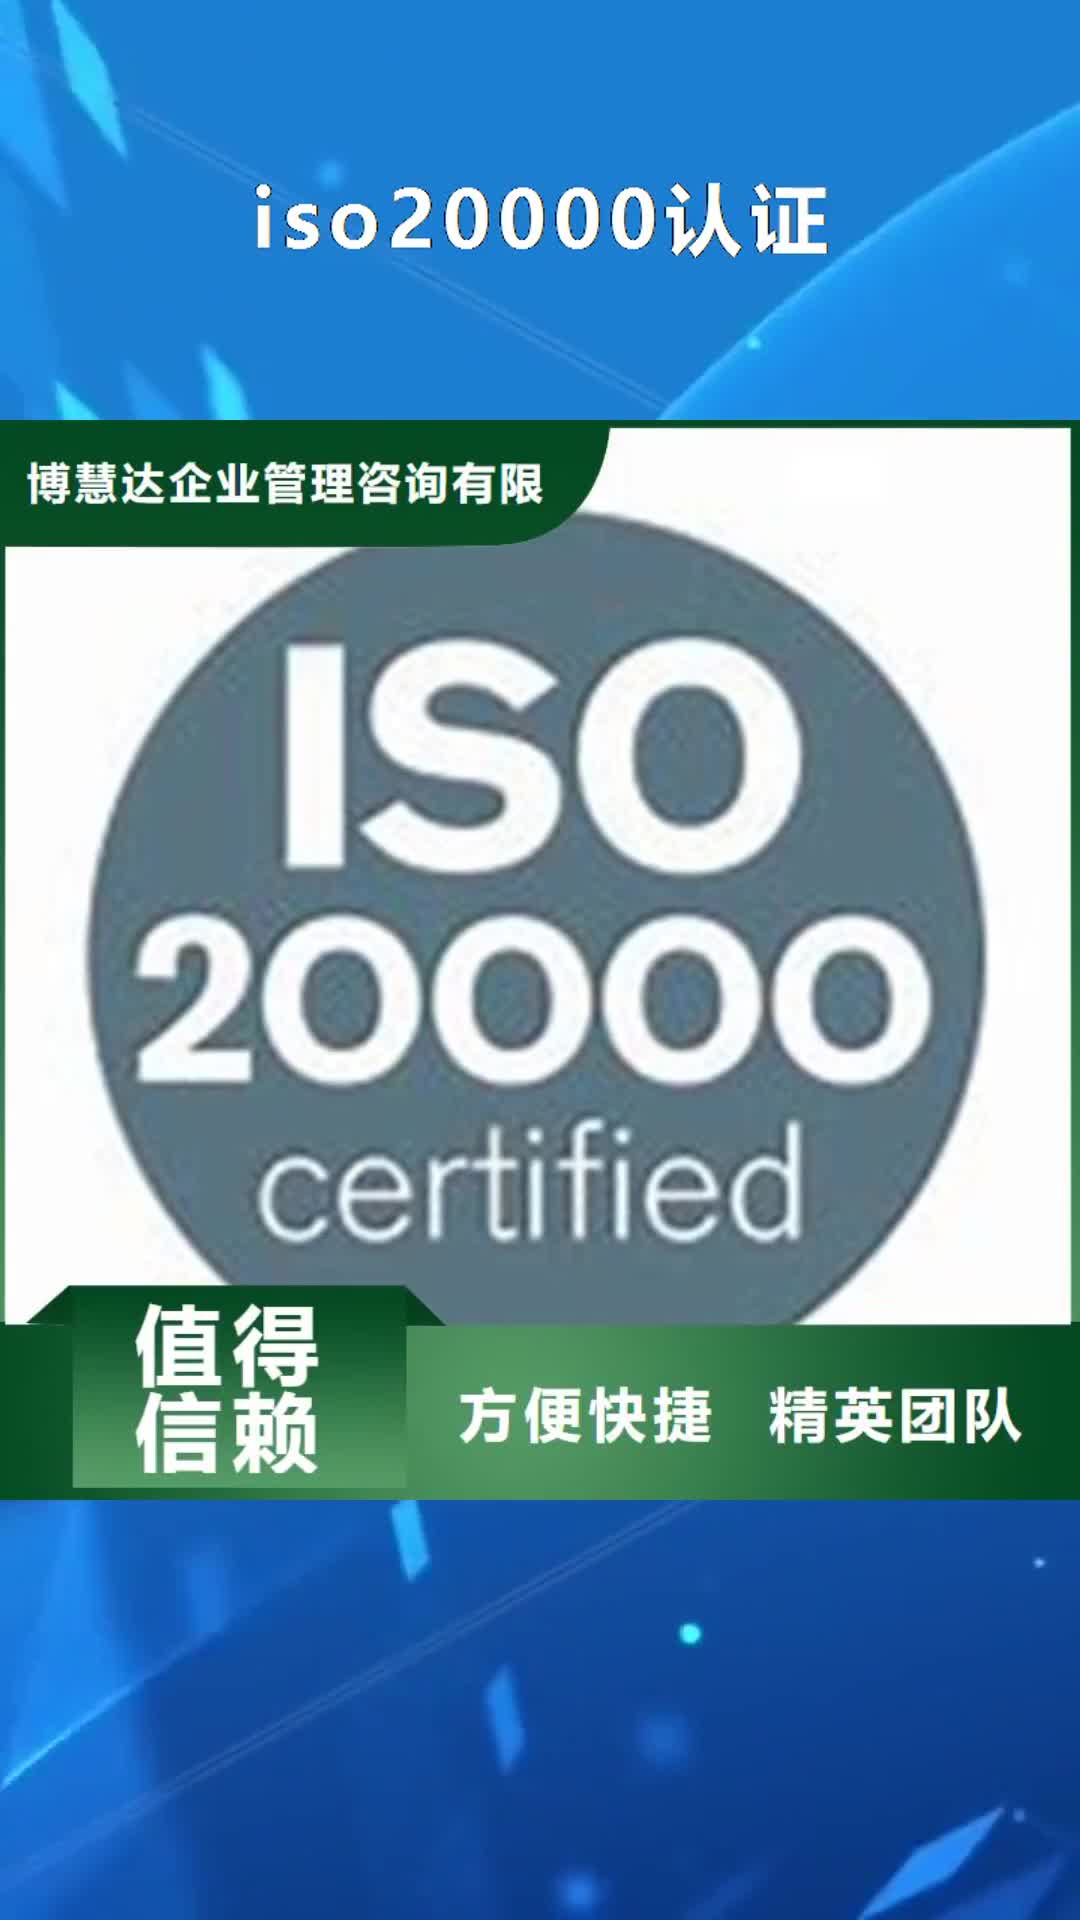 【滨州 iso20000认证_IATF16949认证欢迎询价】